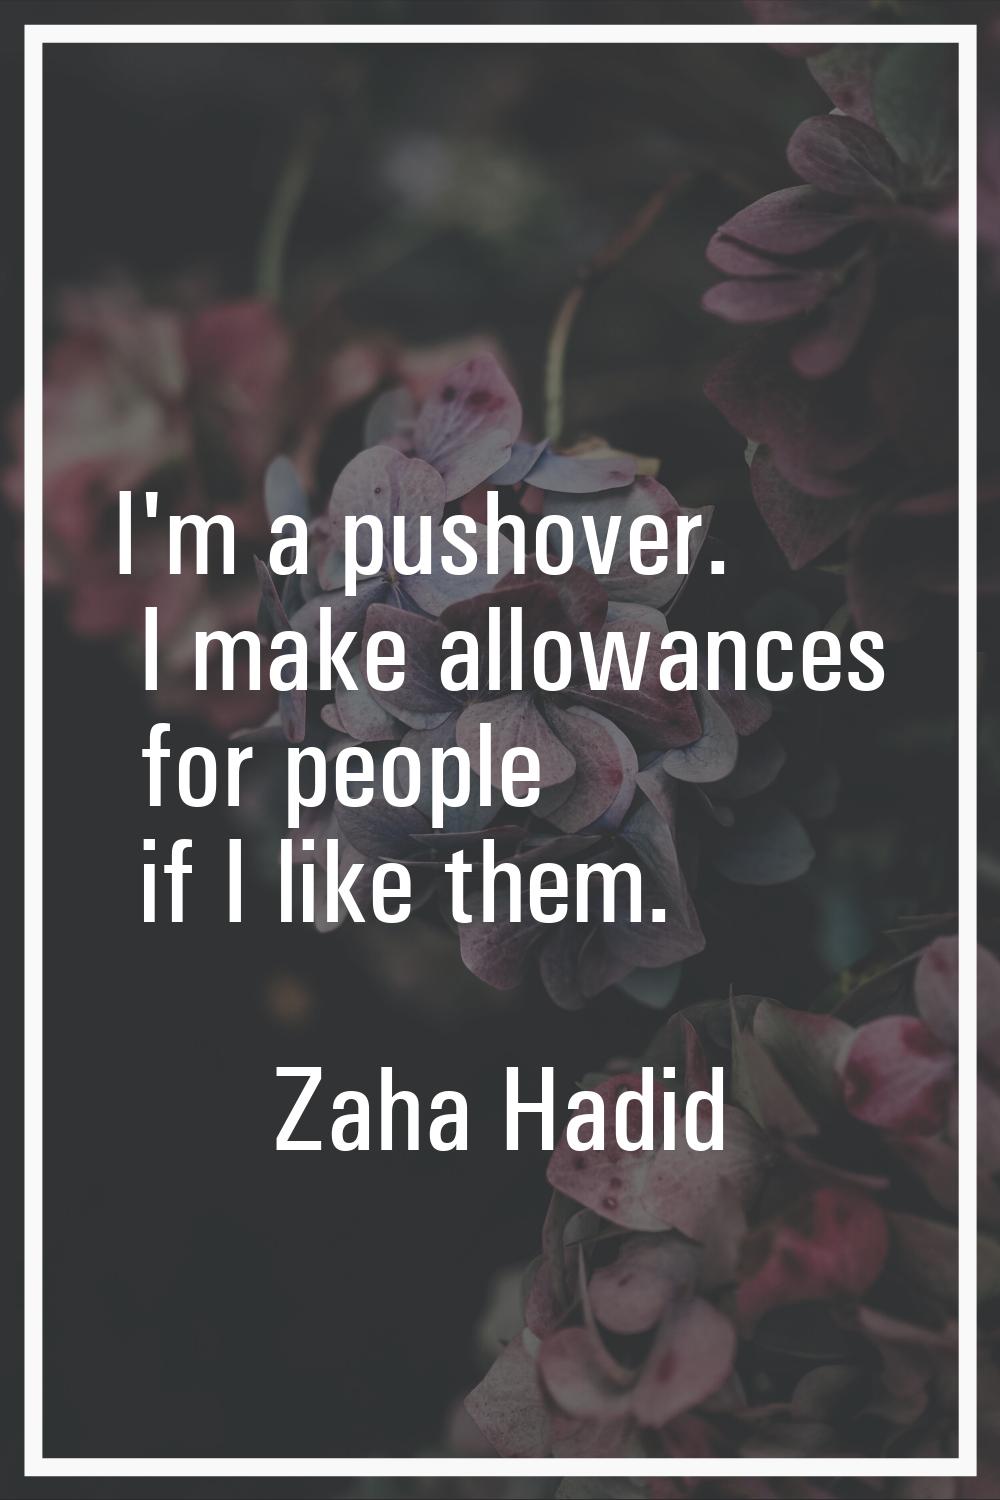 I'm a pushover. I make allowances for people if I like them.